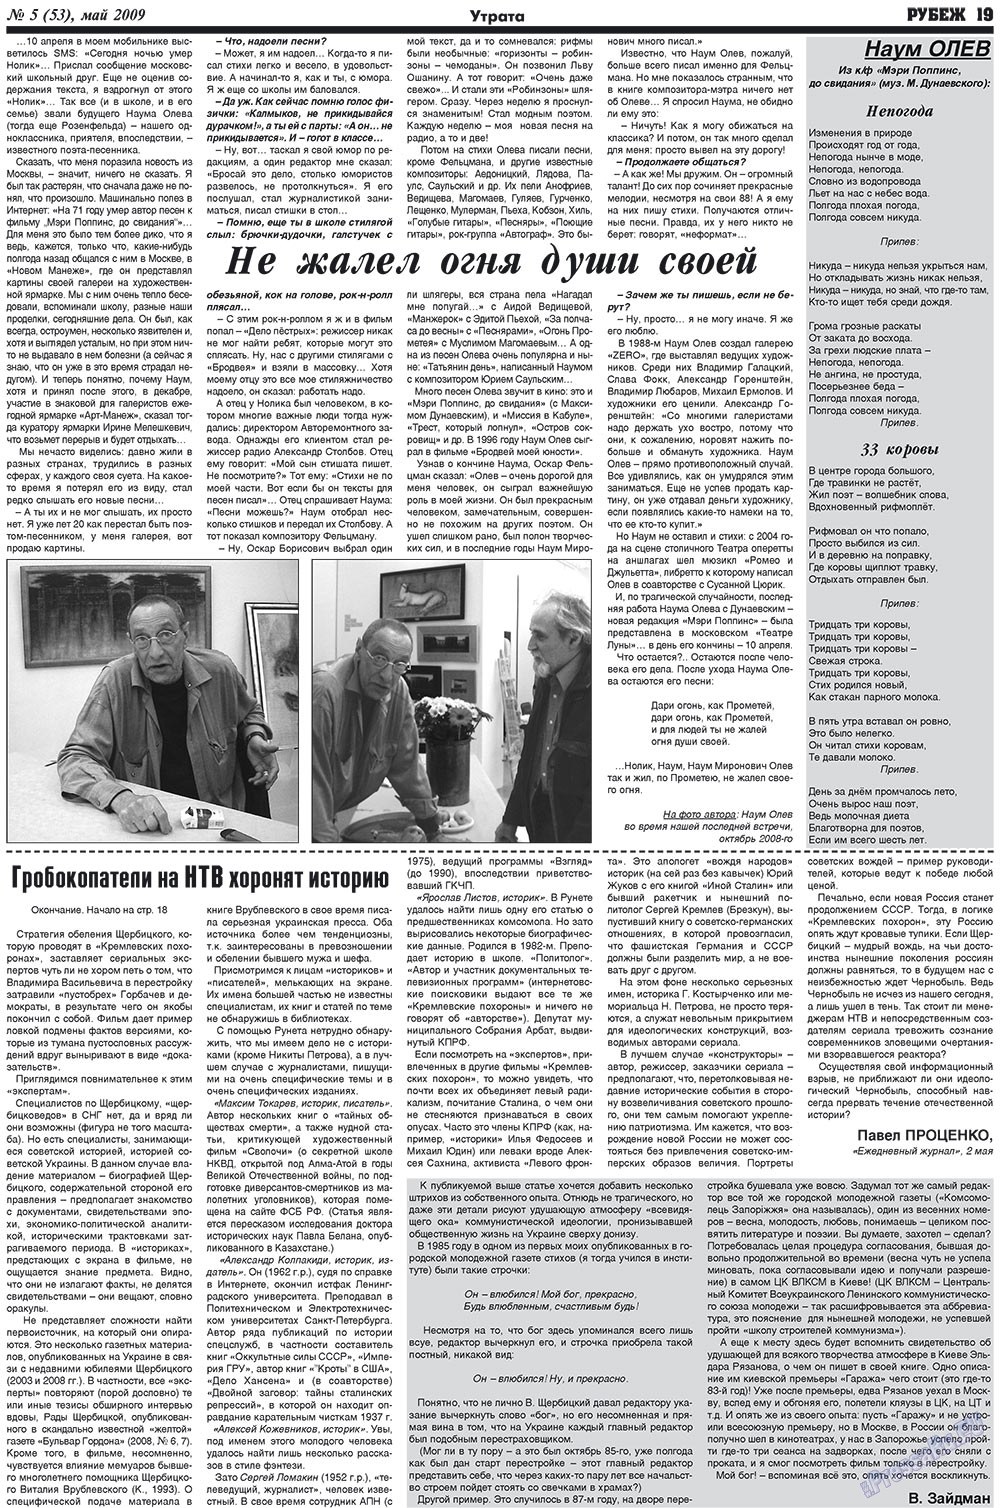 Рубеж, газета. 2009 №5 стр.19